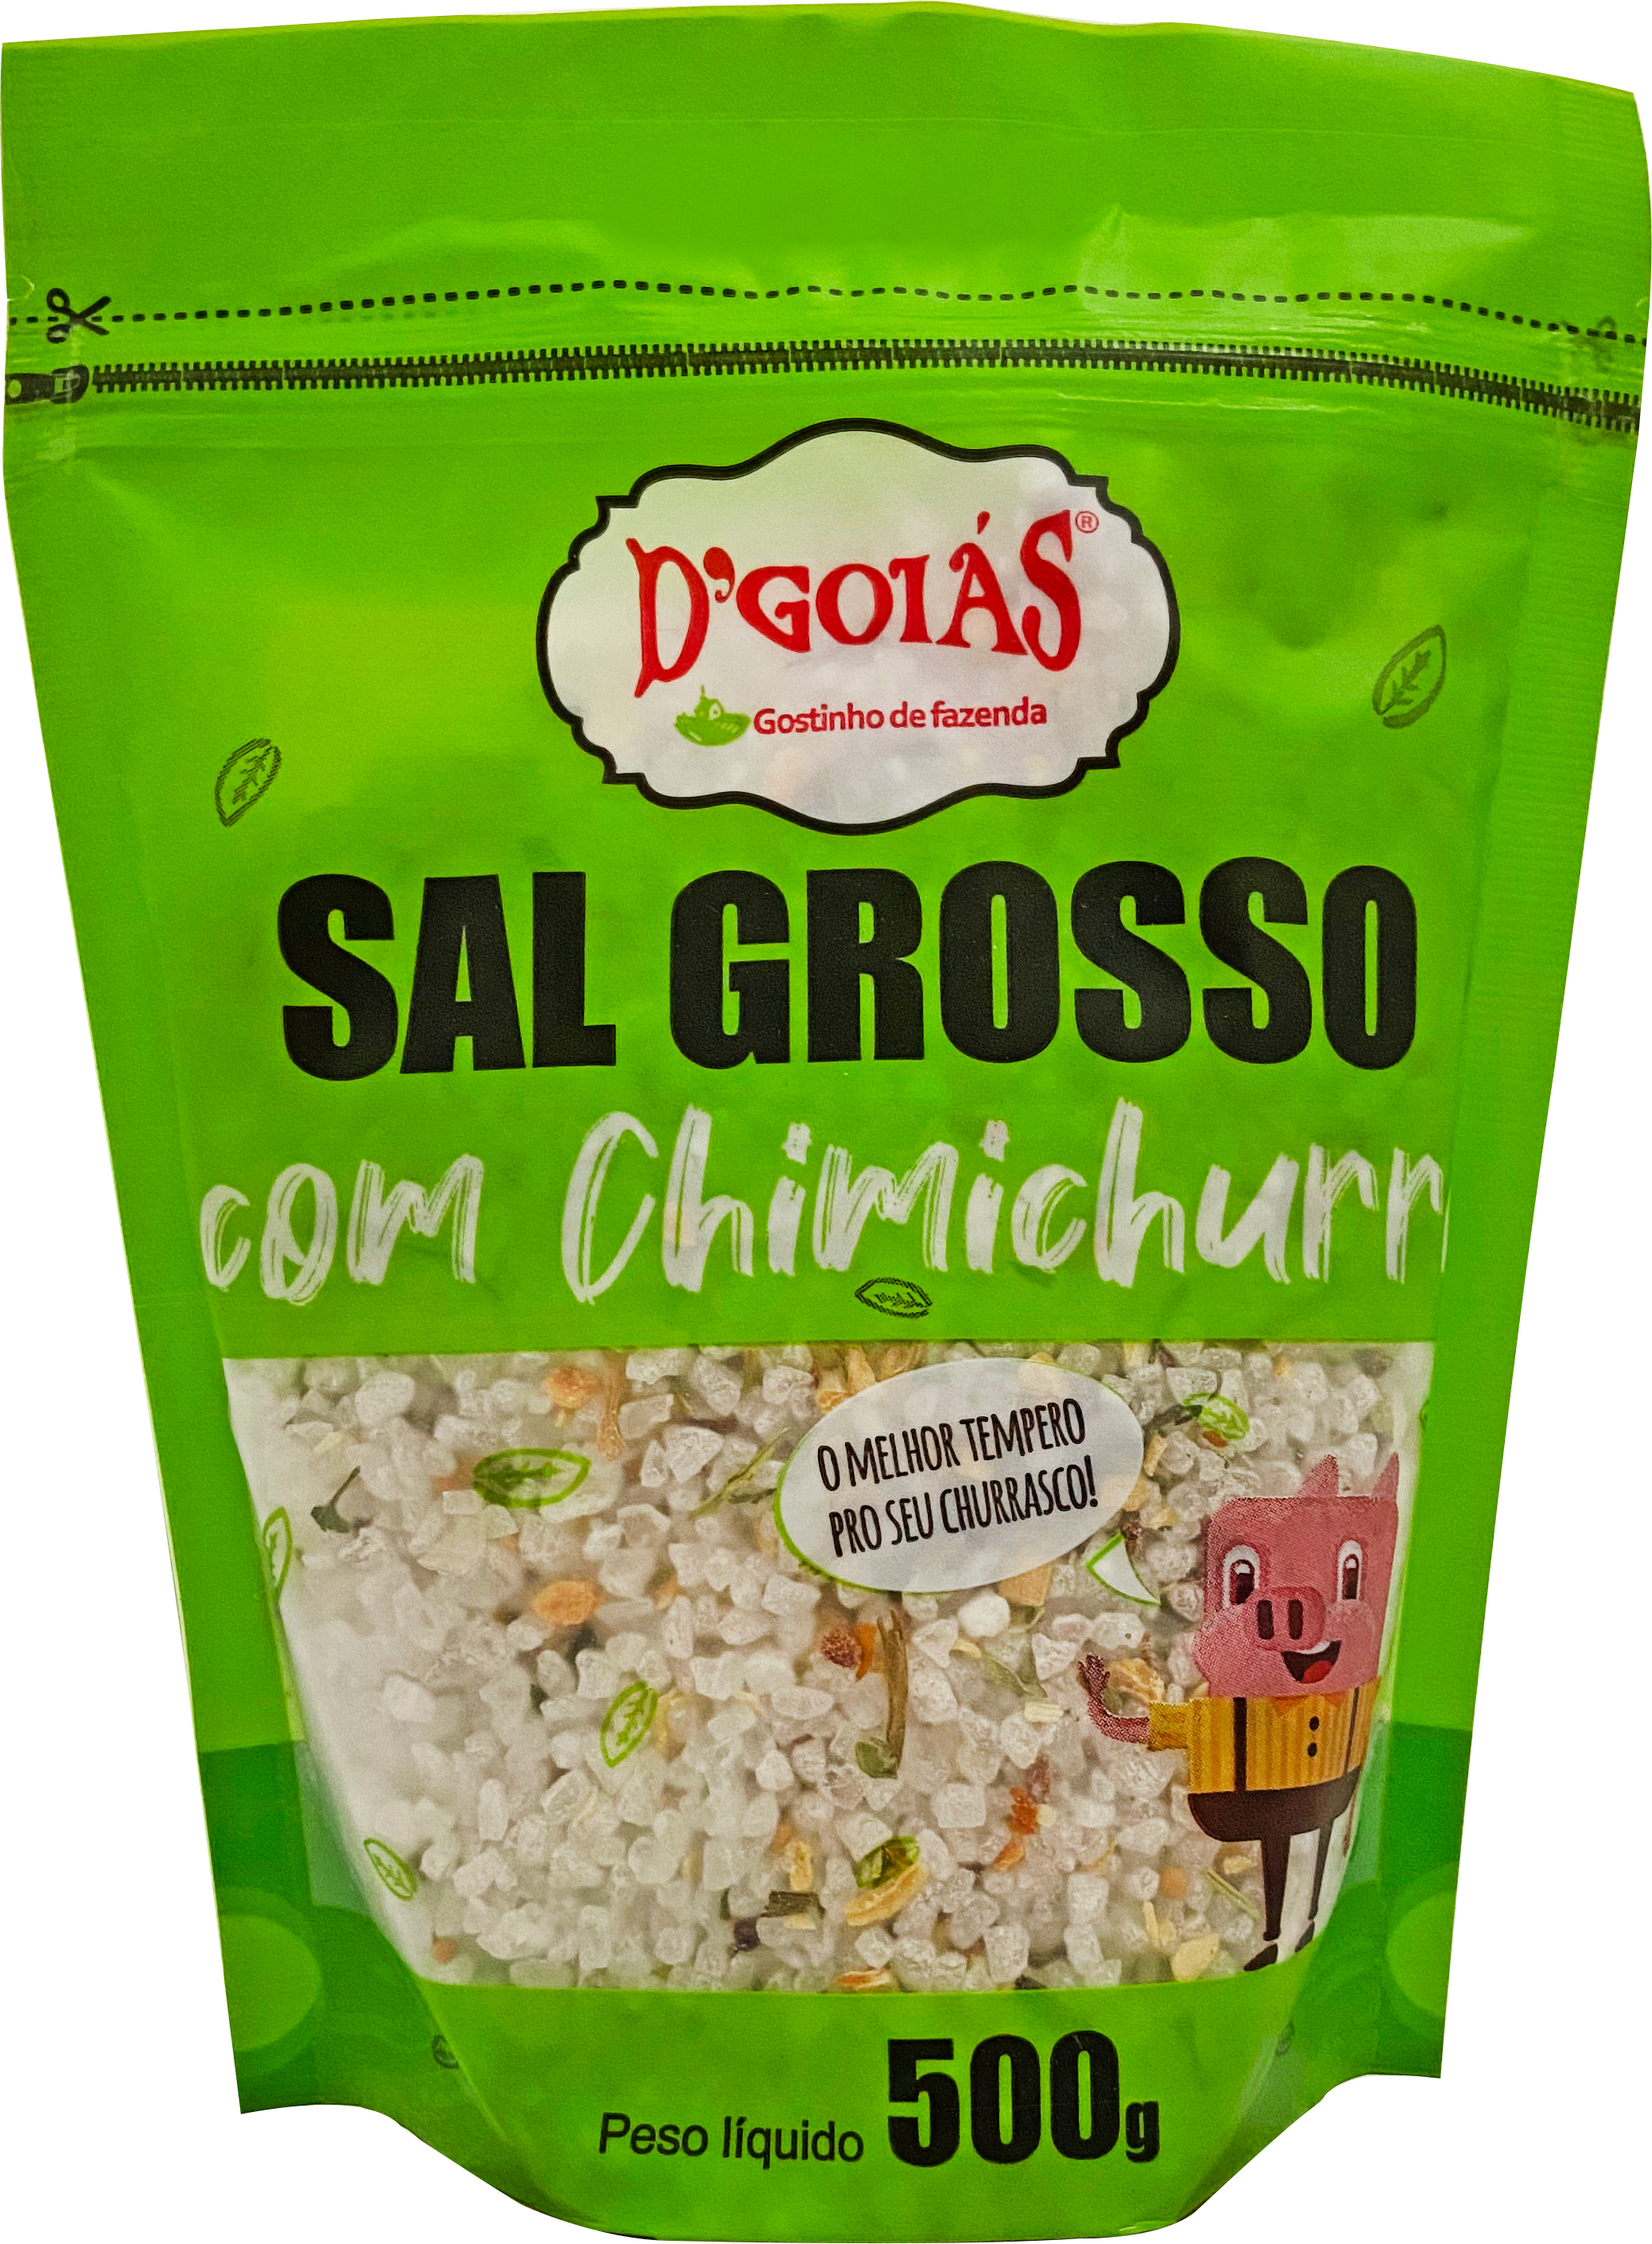 D'GOIAS - BBQ Salt - Chimichurri 500g